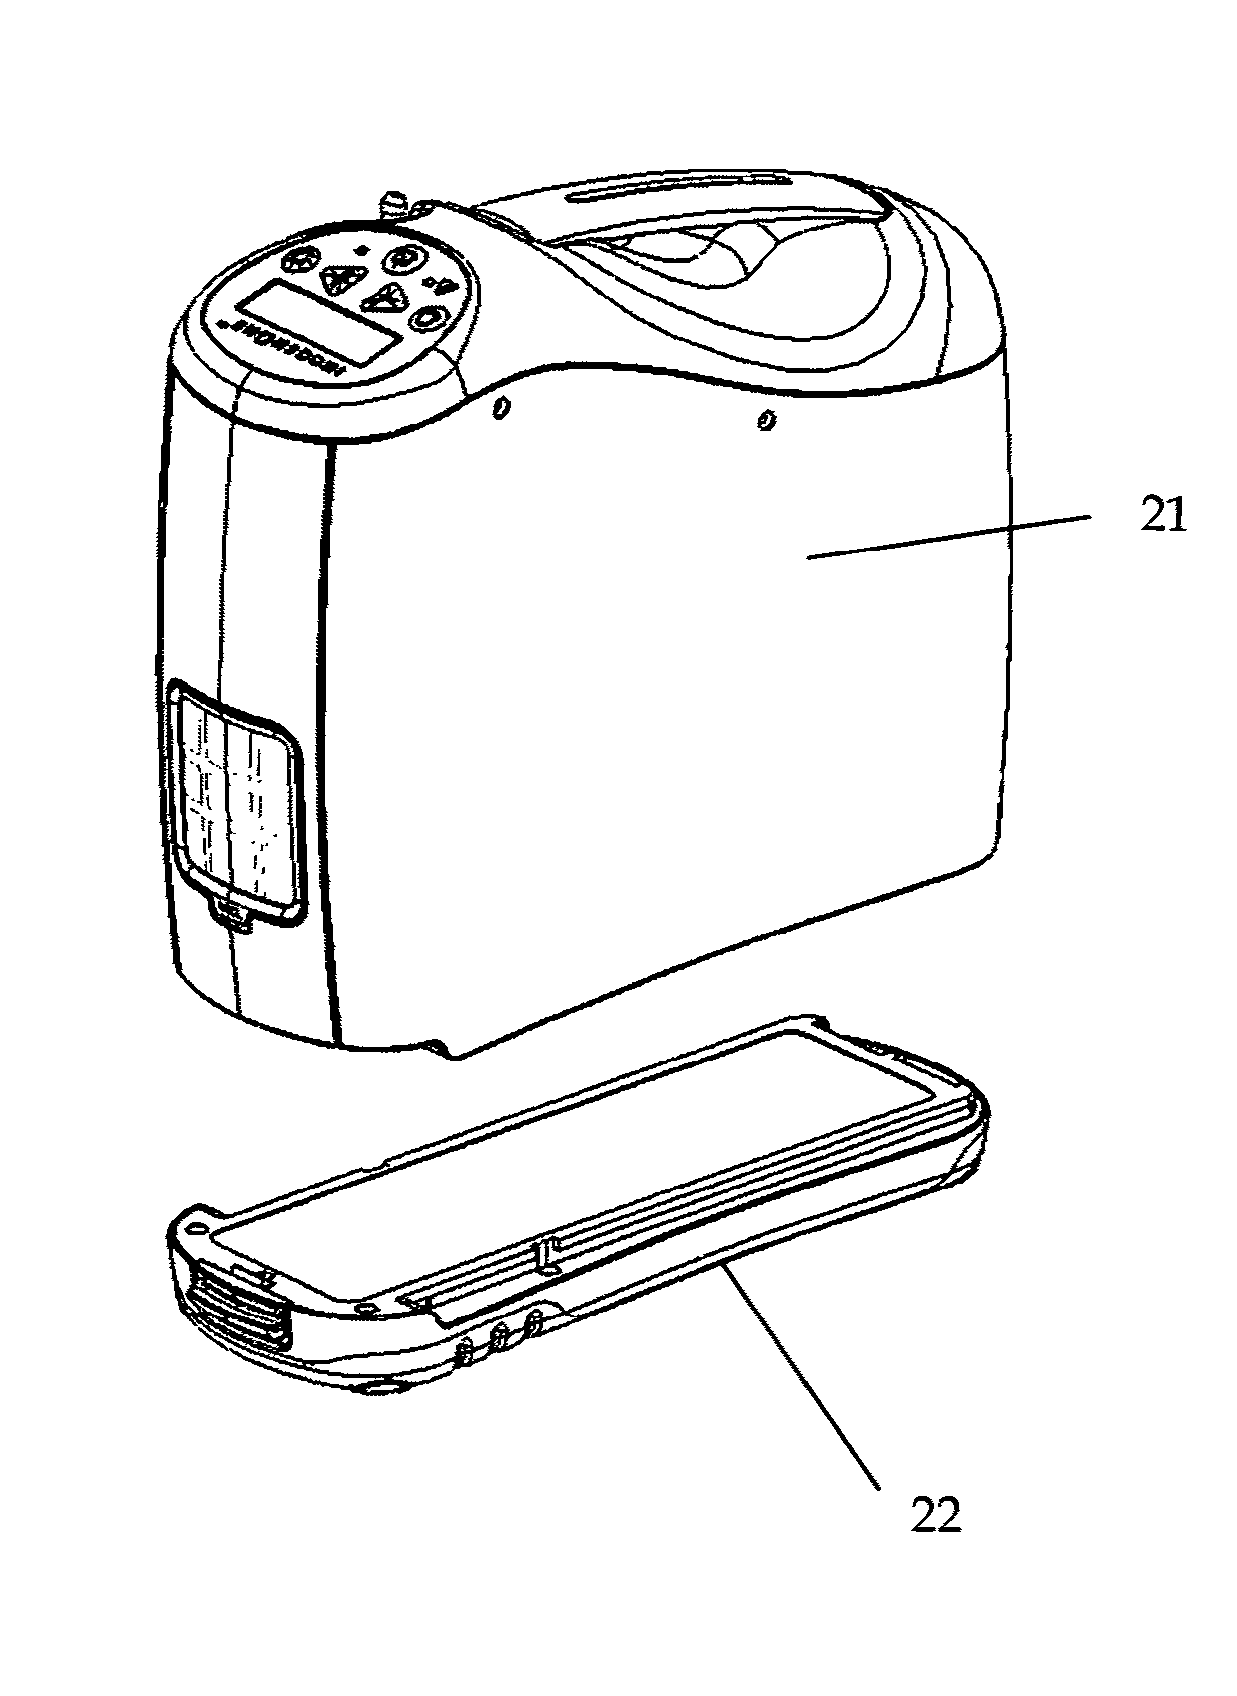 Advanced portable oxygen concentrator